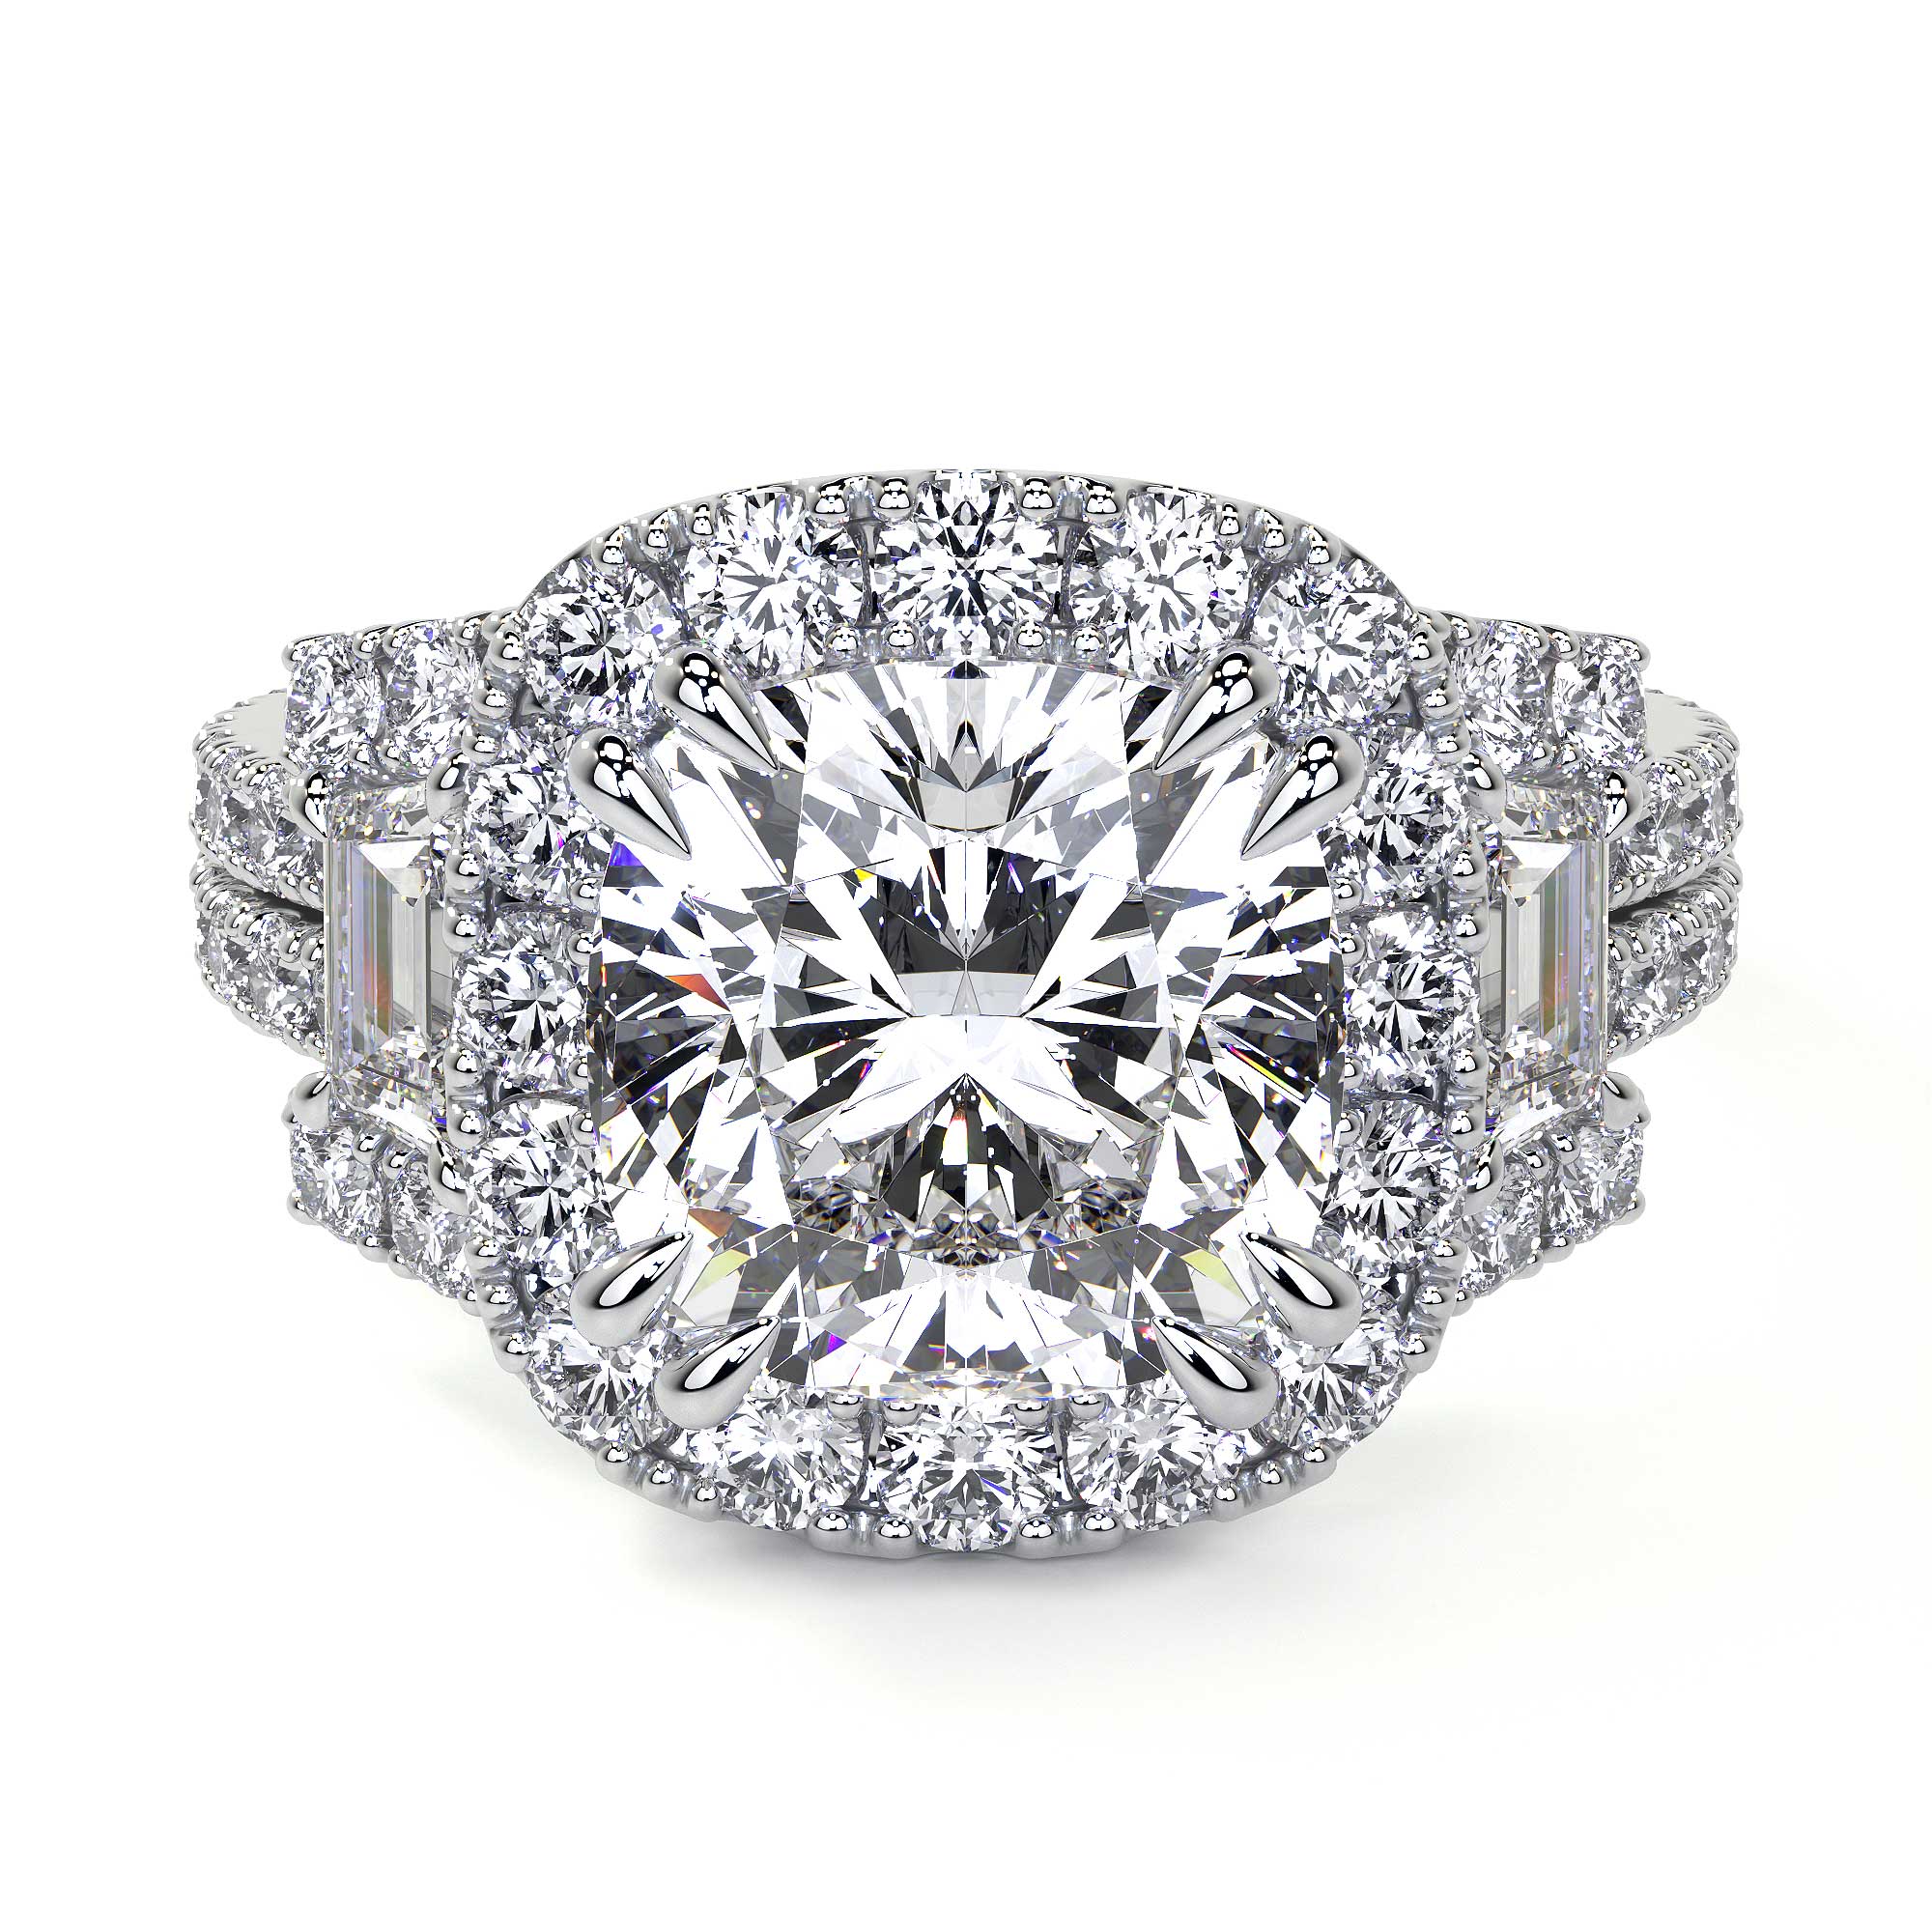 Cushion Cut Diamond Ring With Halo - Rings - Leviev Diamonds